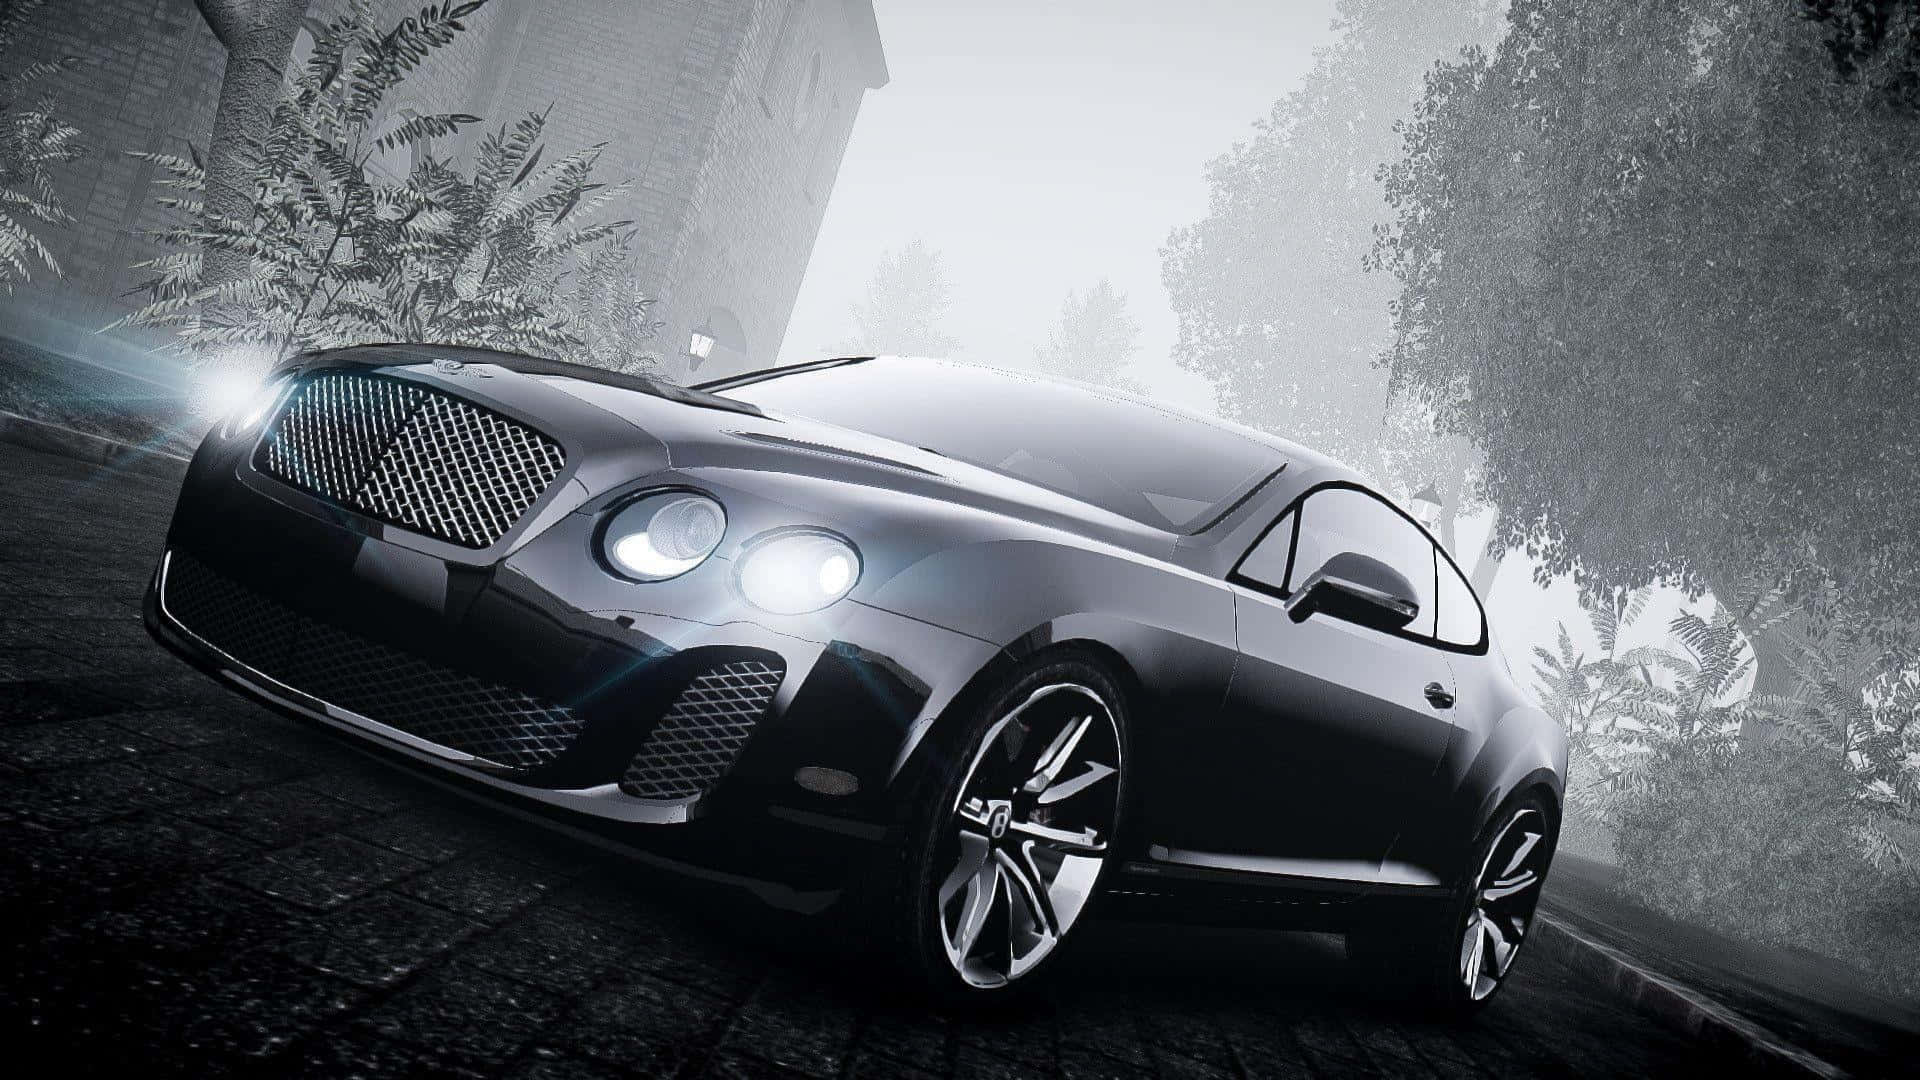 Lussosontuoso: La Migliore Bentley